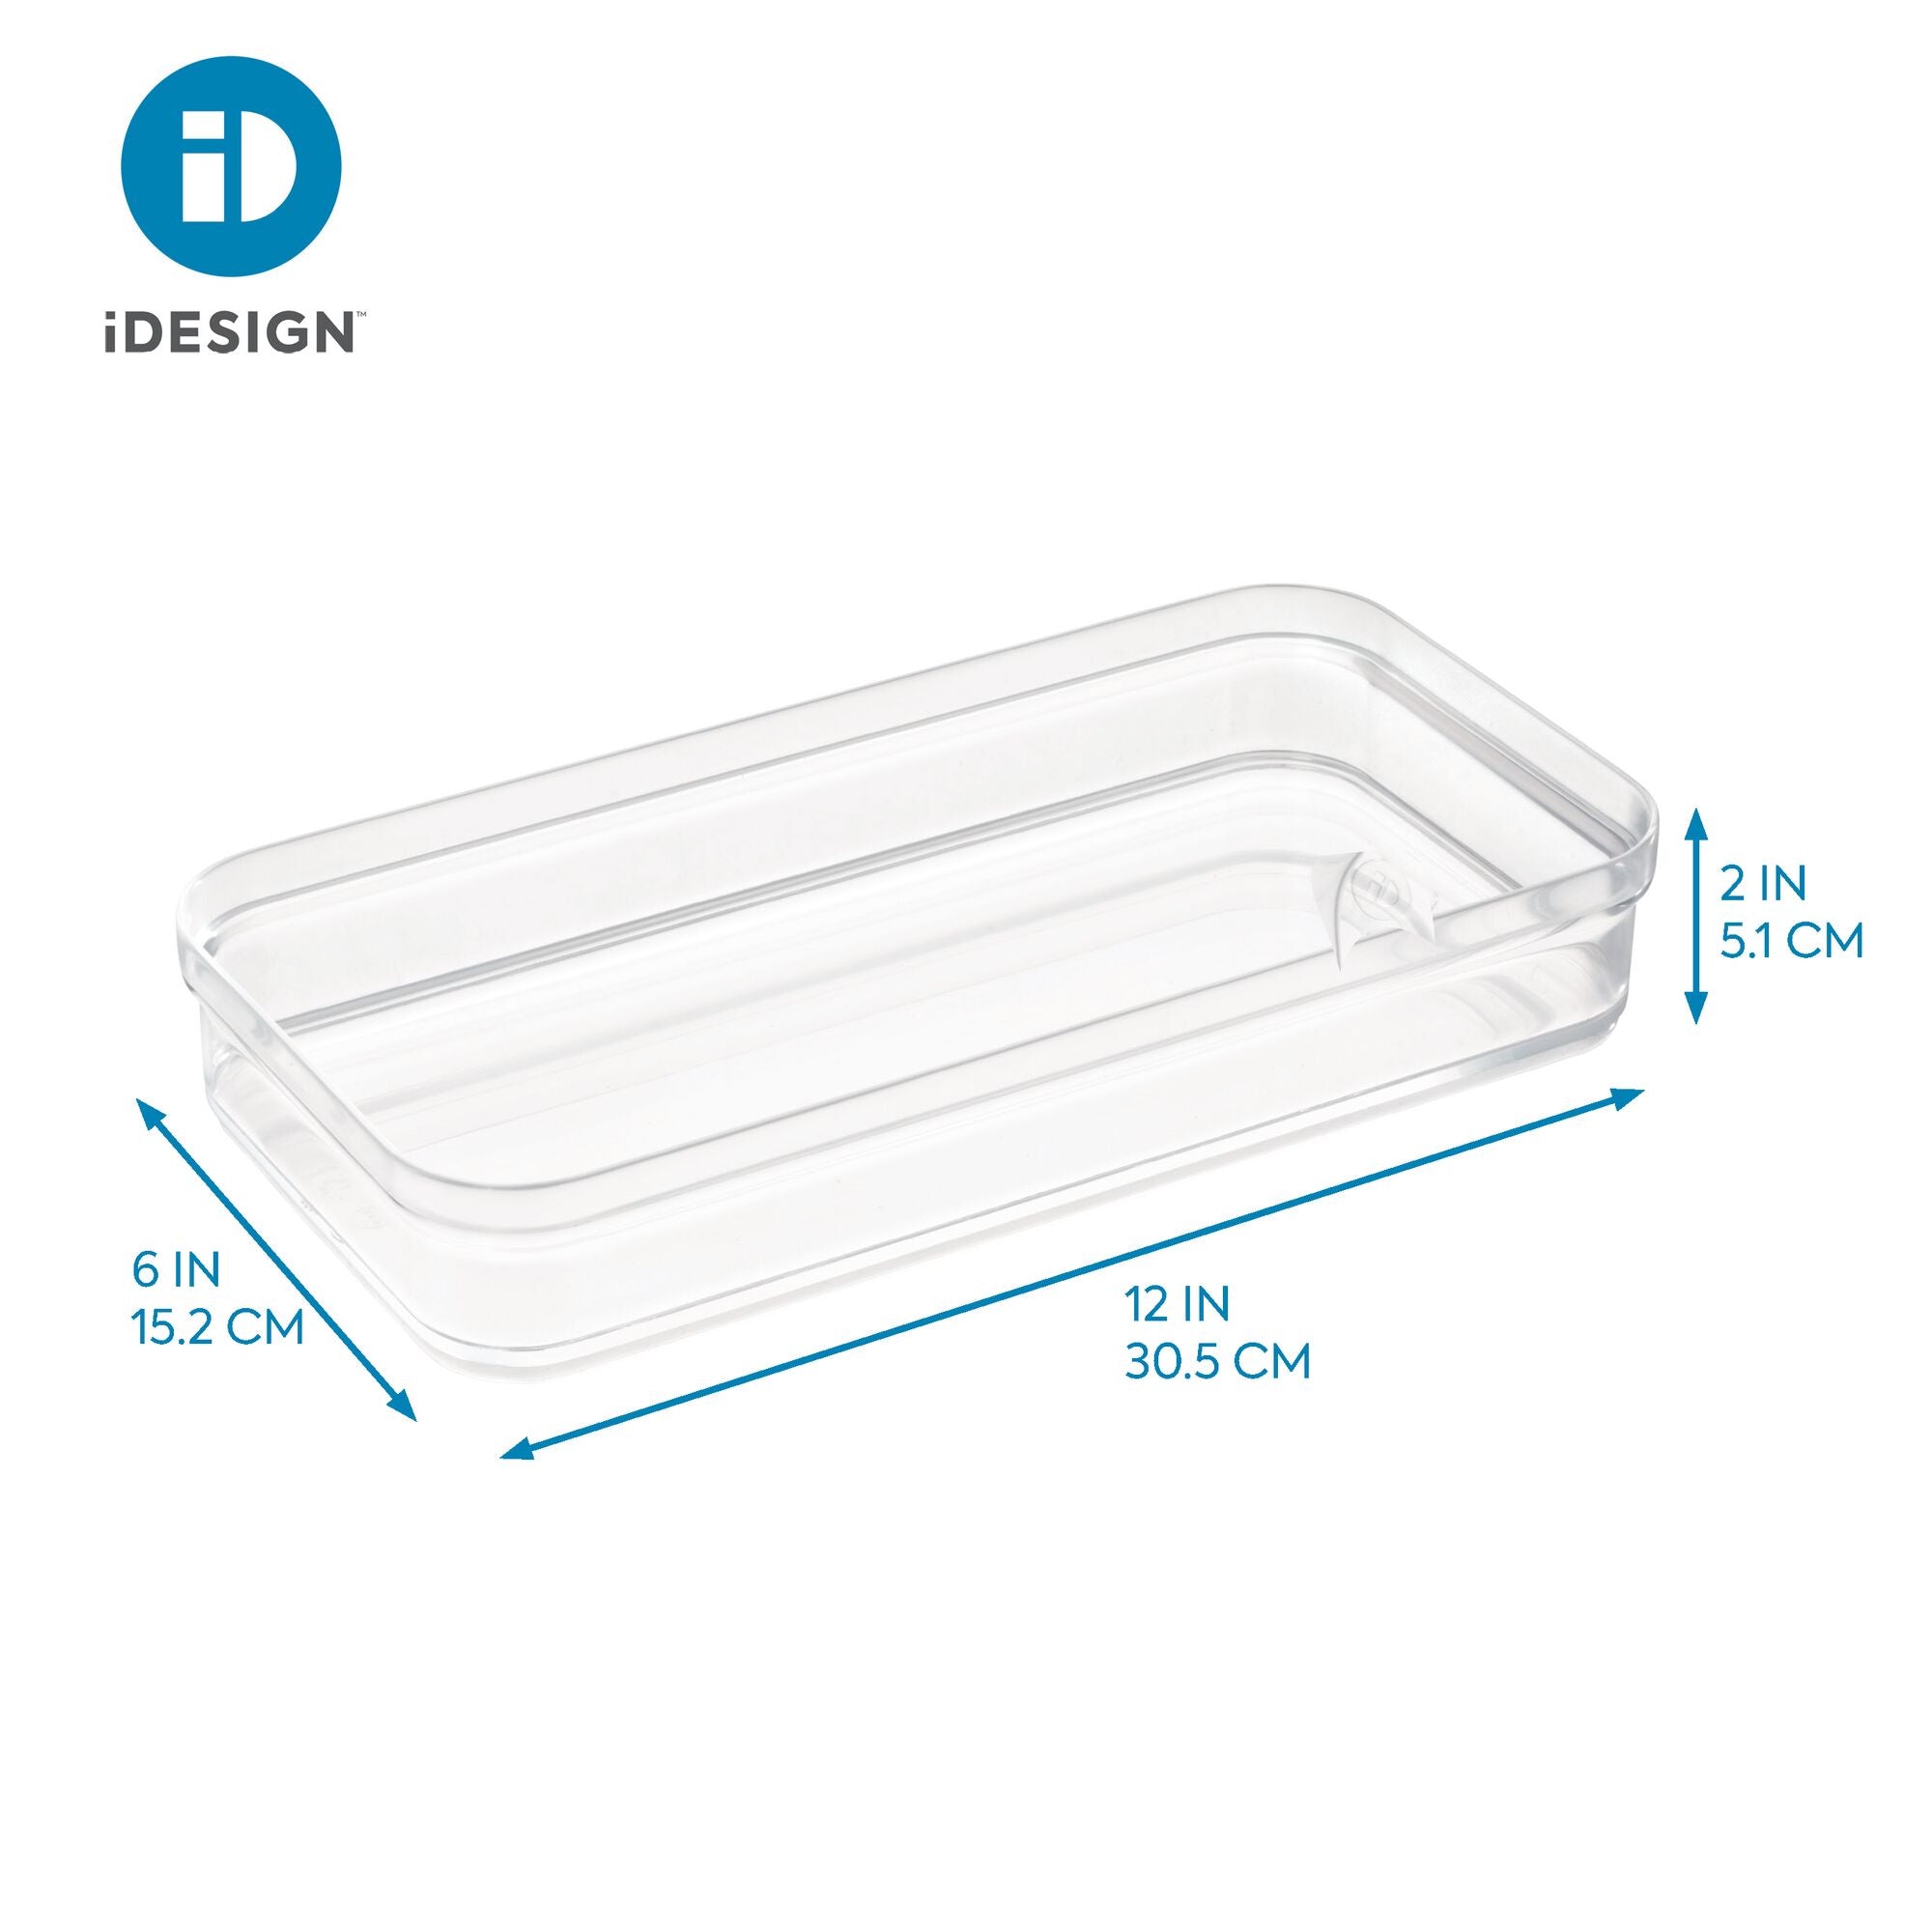 iDesign Eco BPA-Free Recycled Plastic Kitchen Drawer Organizer Bin